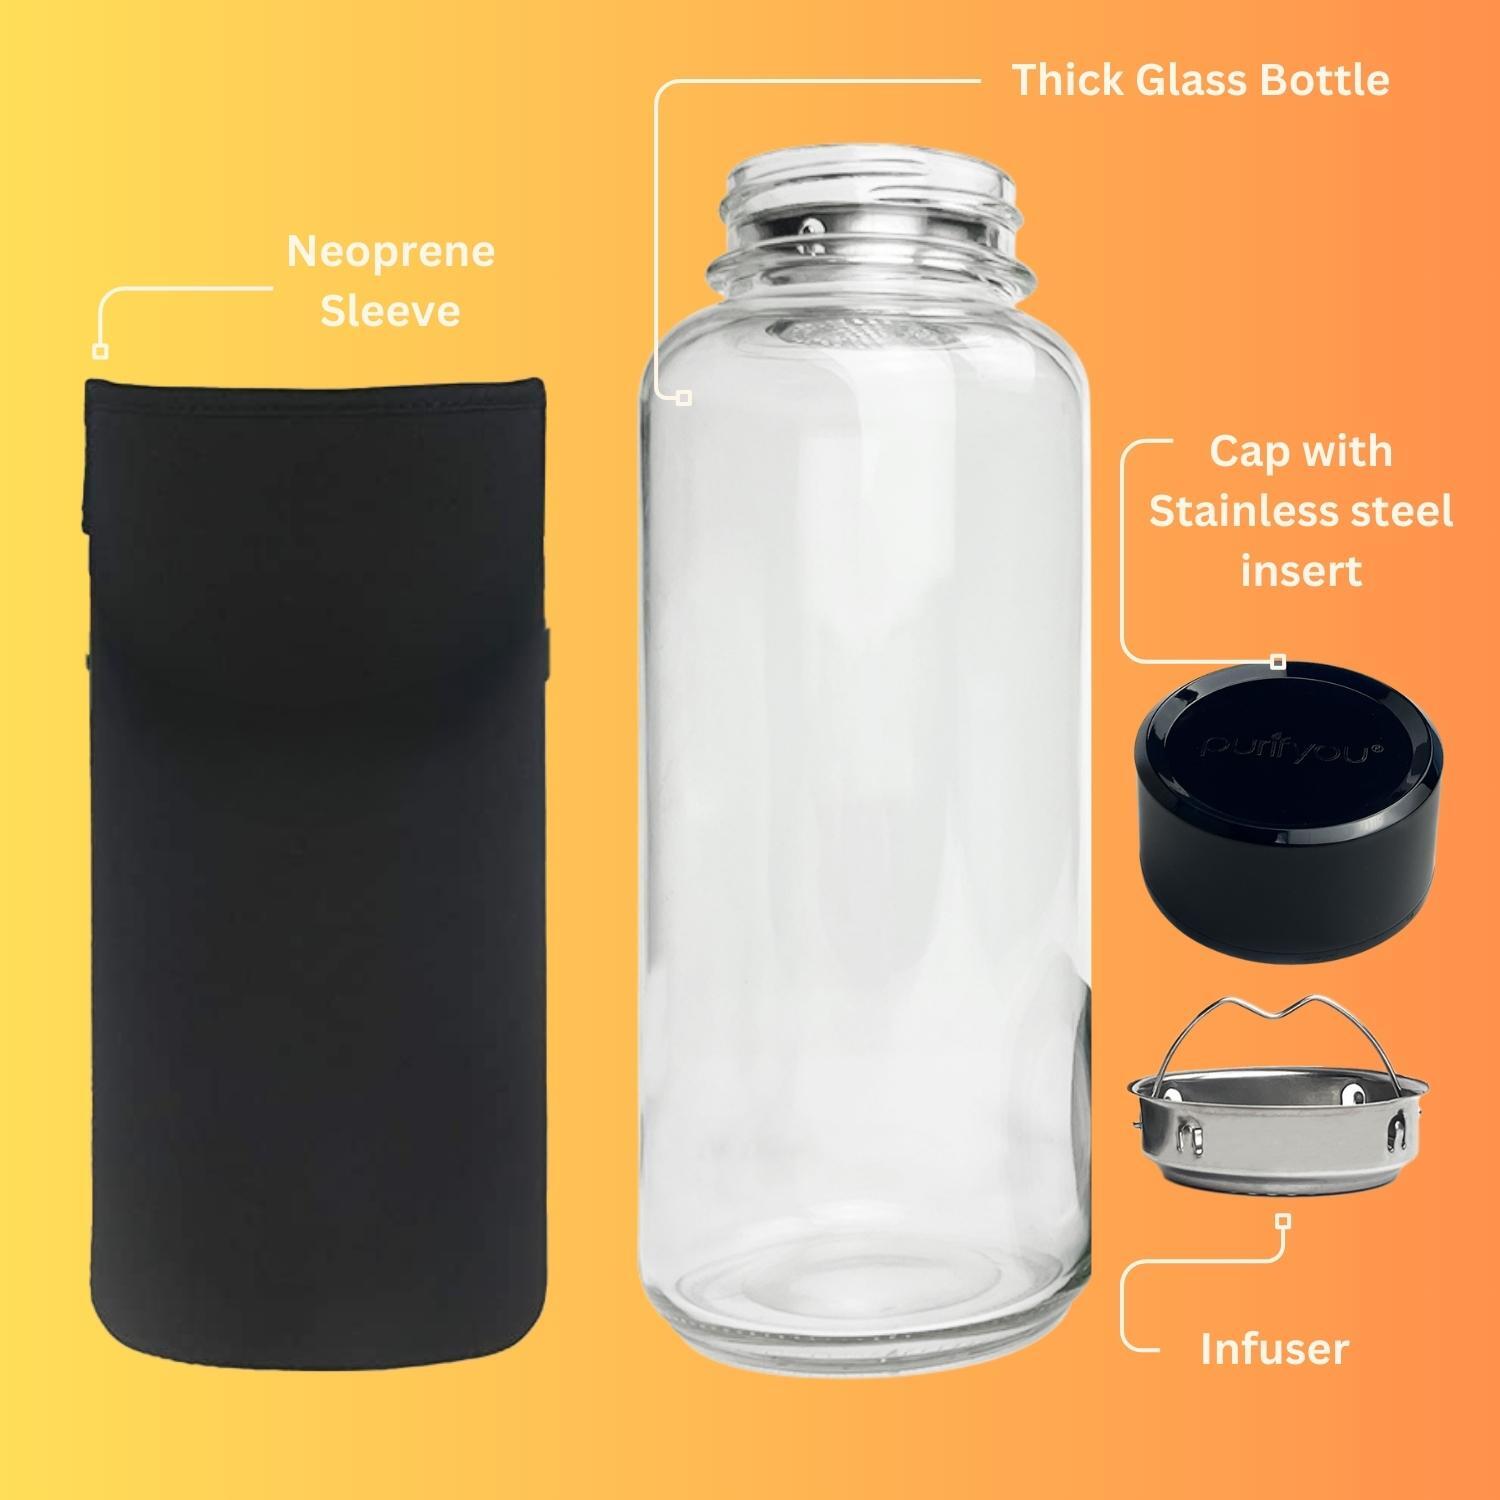 12oz/32oz Premium Glass Water Bottle – Purifyou